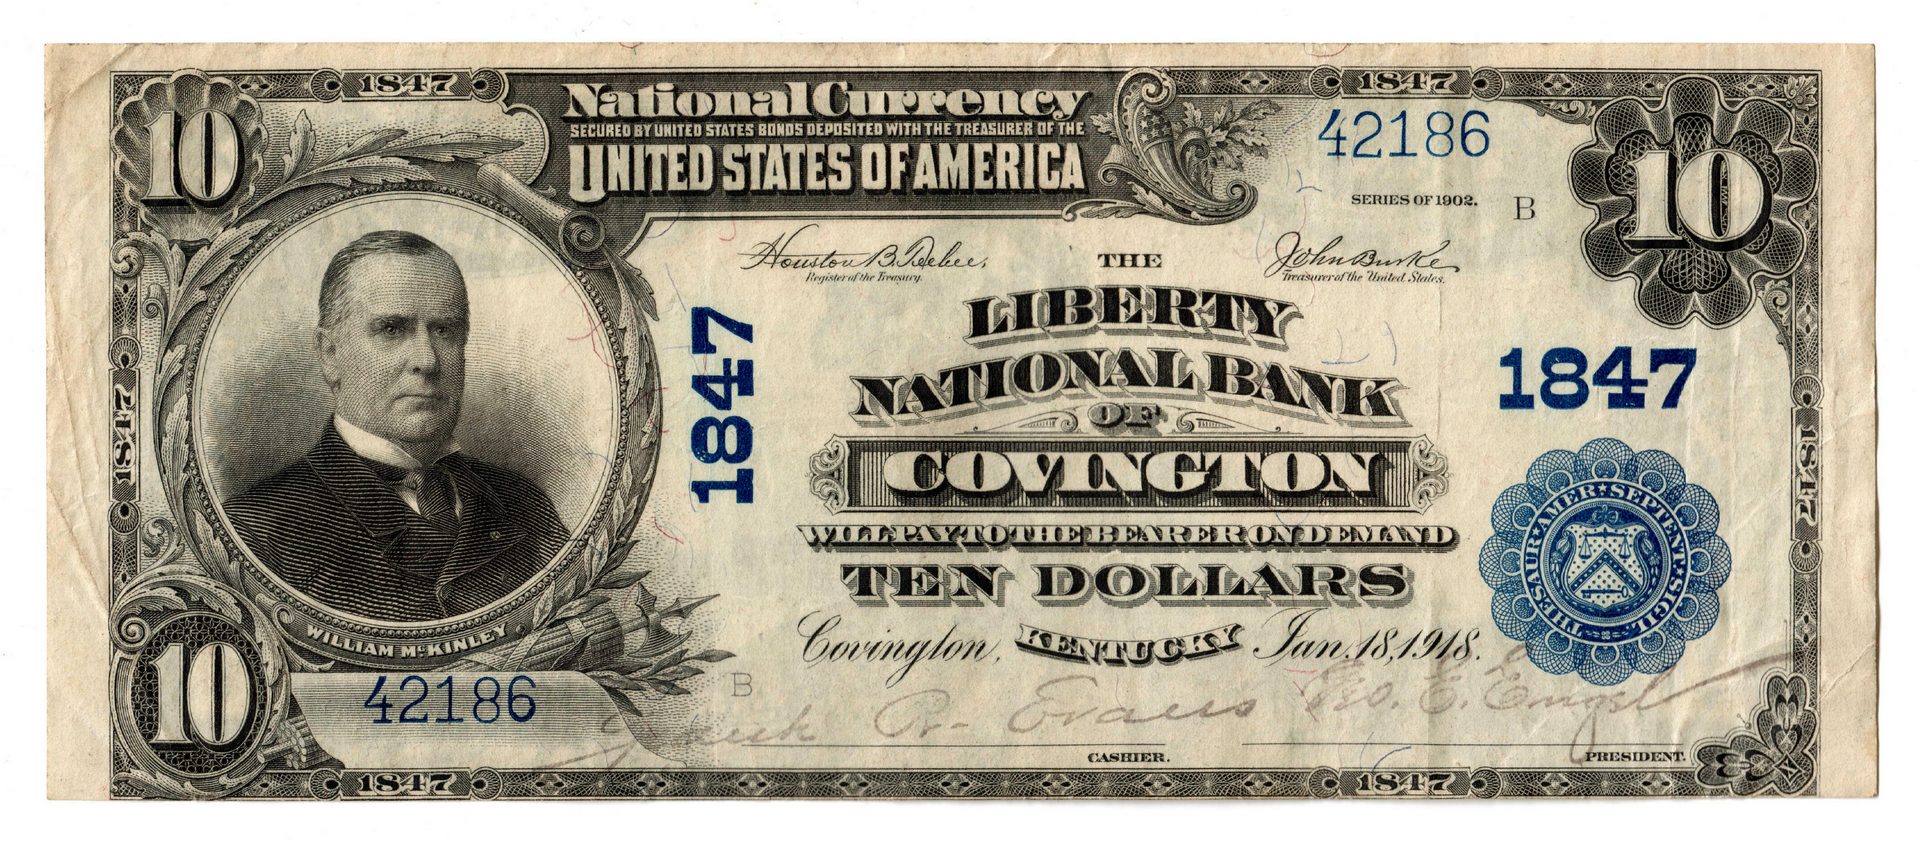 Lot 71: 1902 $10 Liberty National Bank of Covington Nation